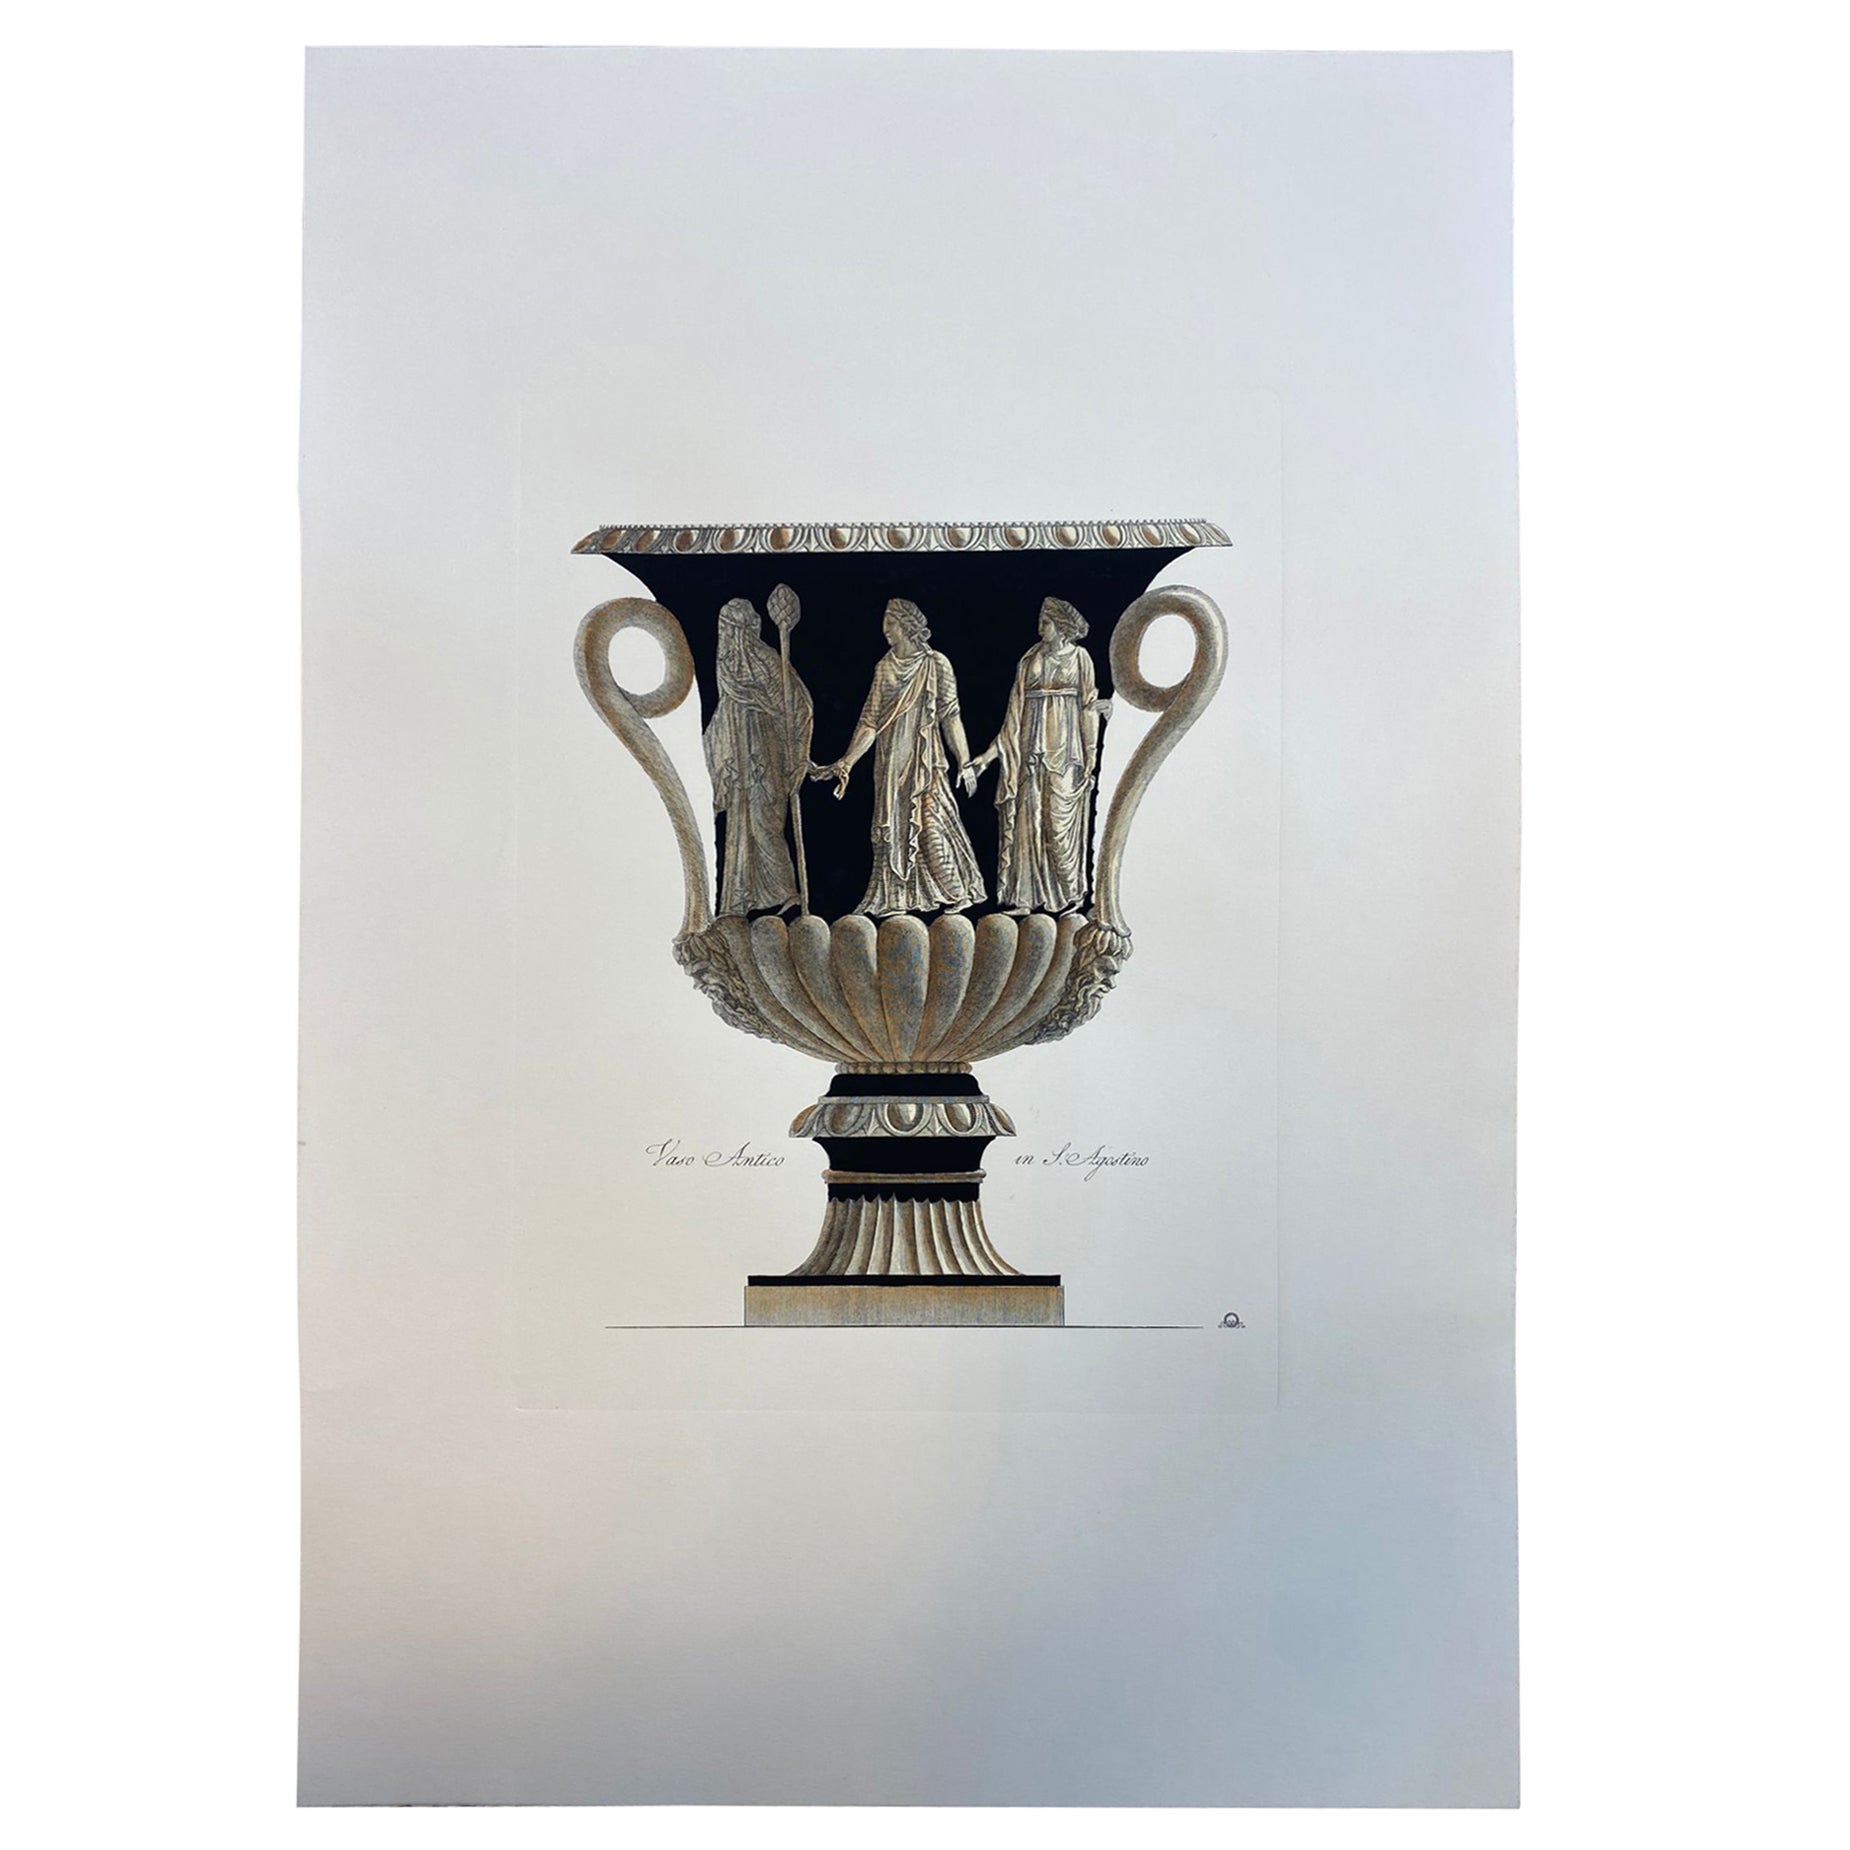 Contemporary Italian Hand Coloured Antique Roman Vase Print " in S.Agostino"